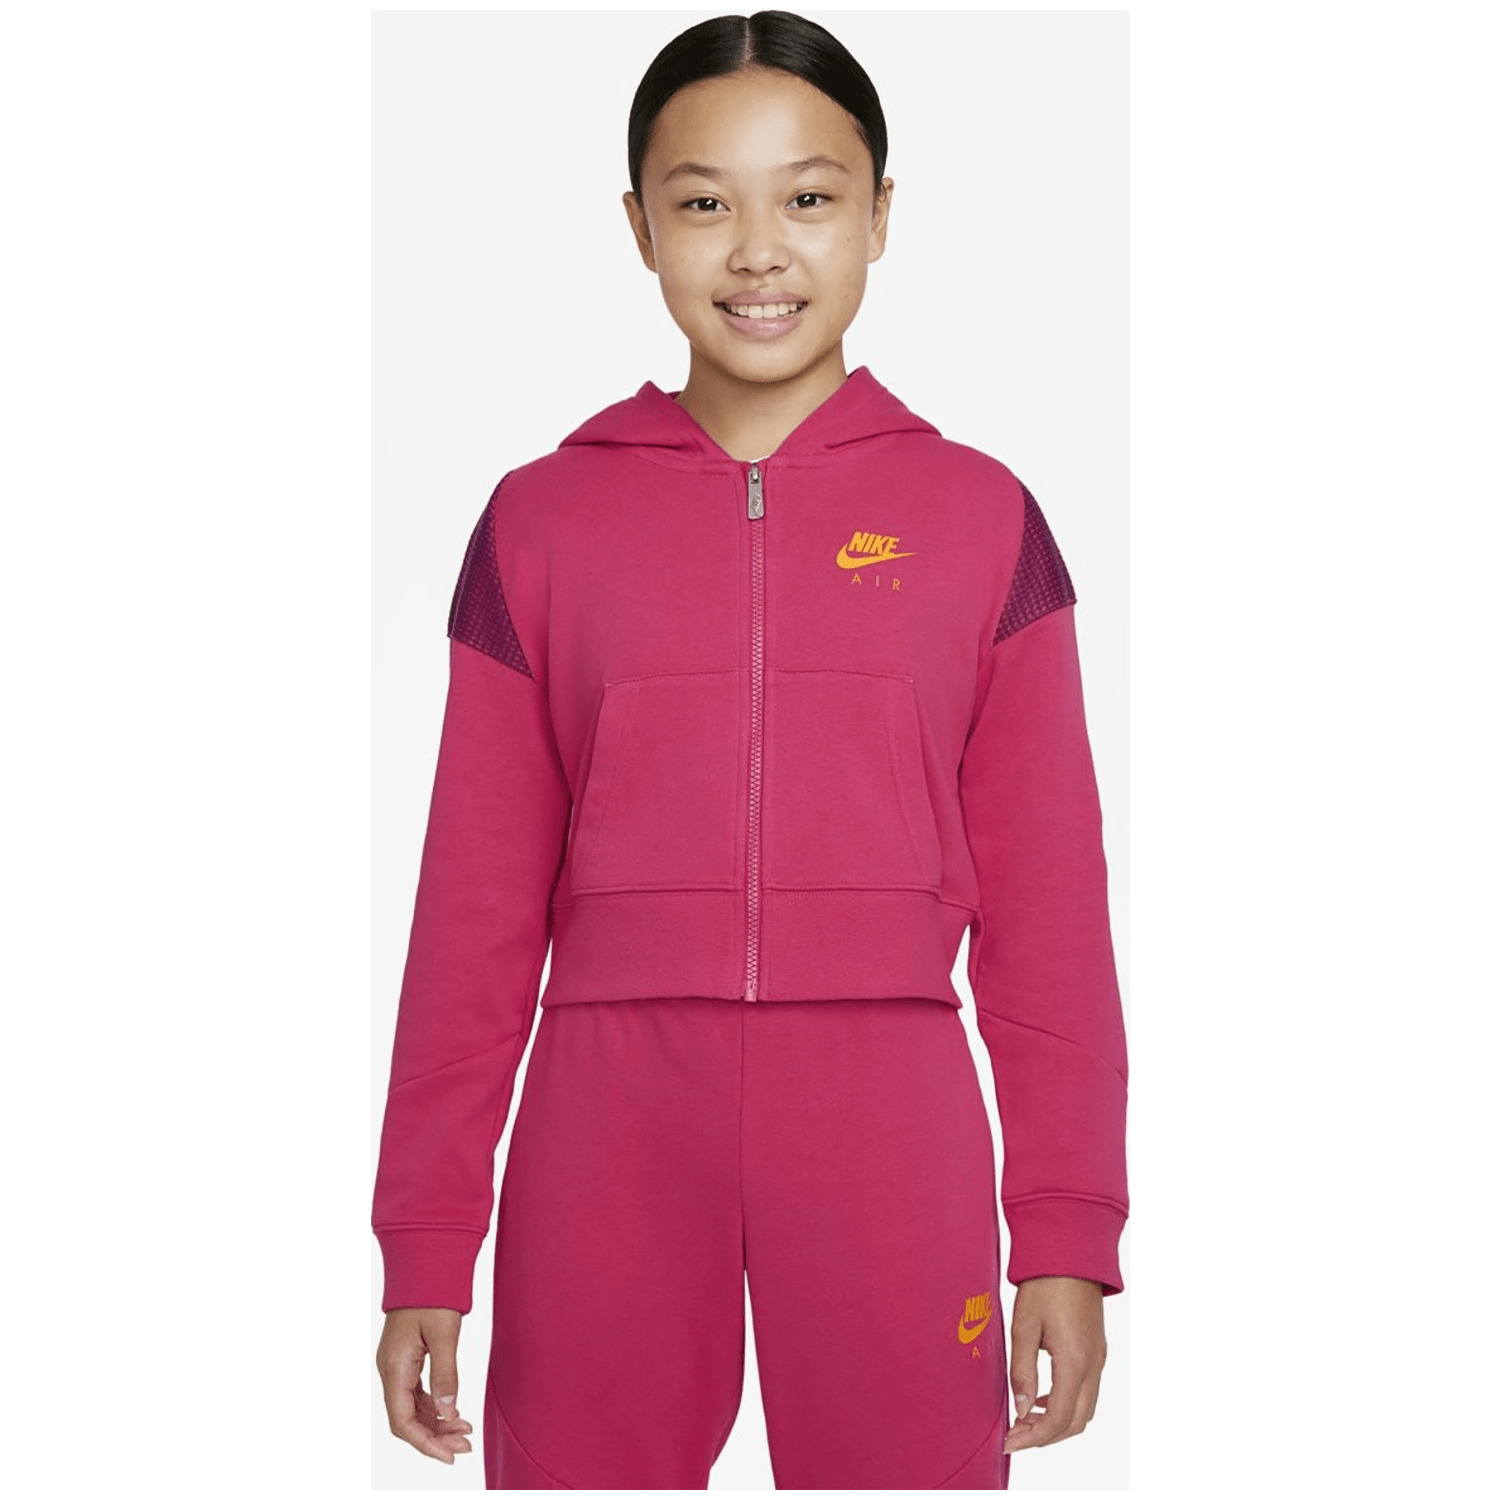 Nike Air French Terry Full-Zip Mädchen Unterjacke